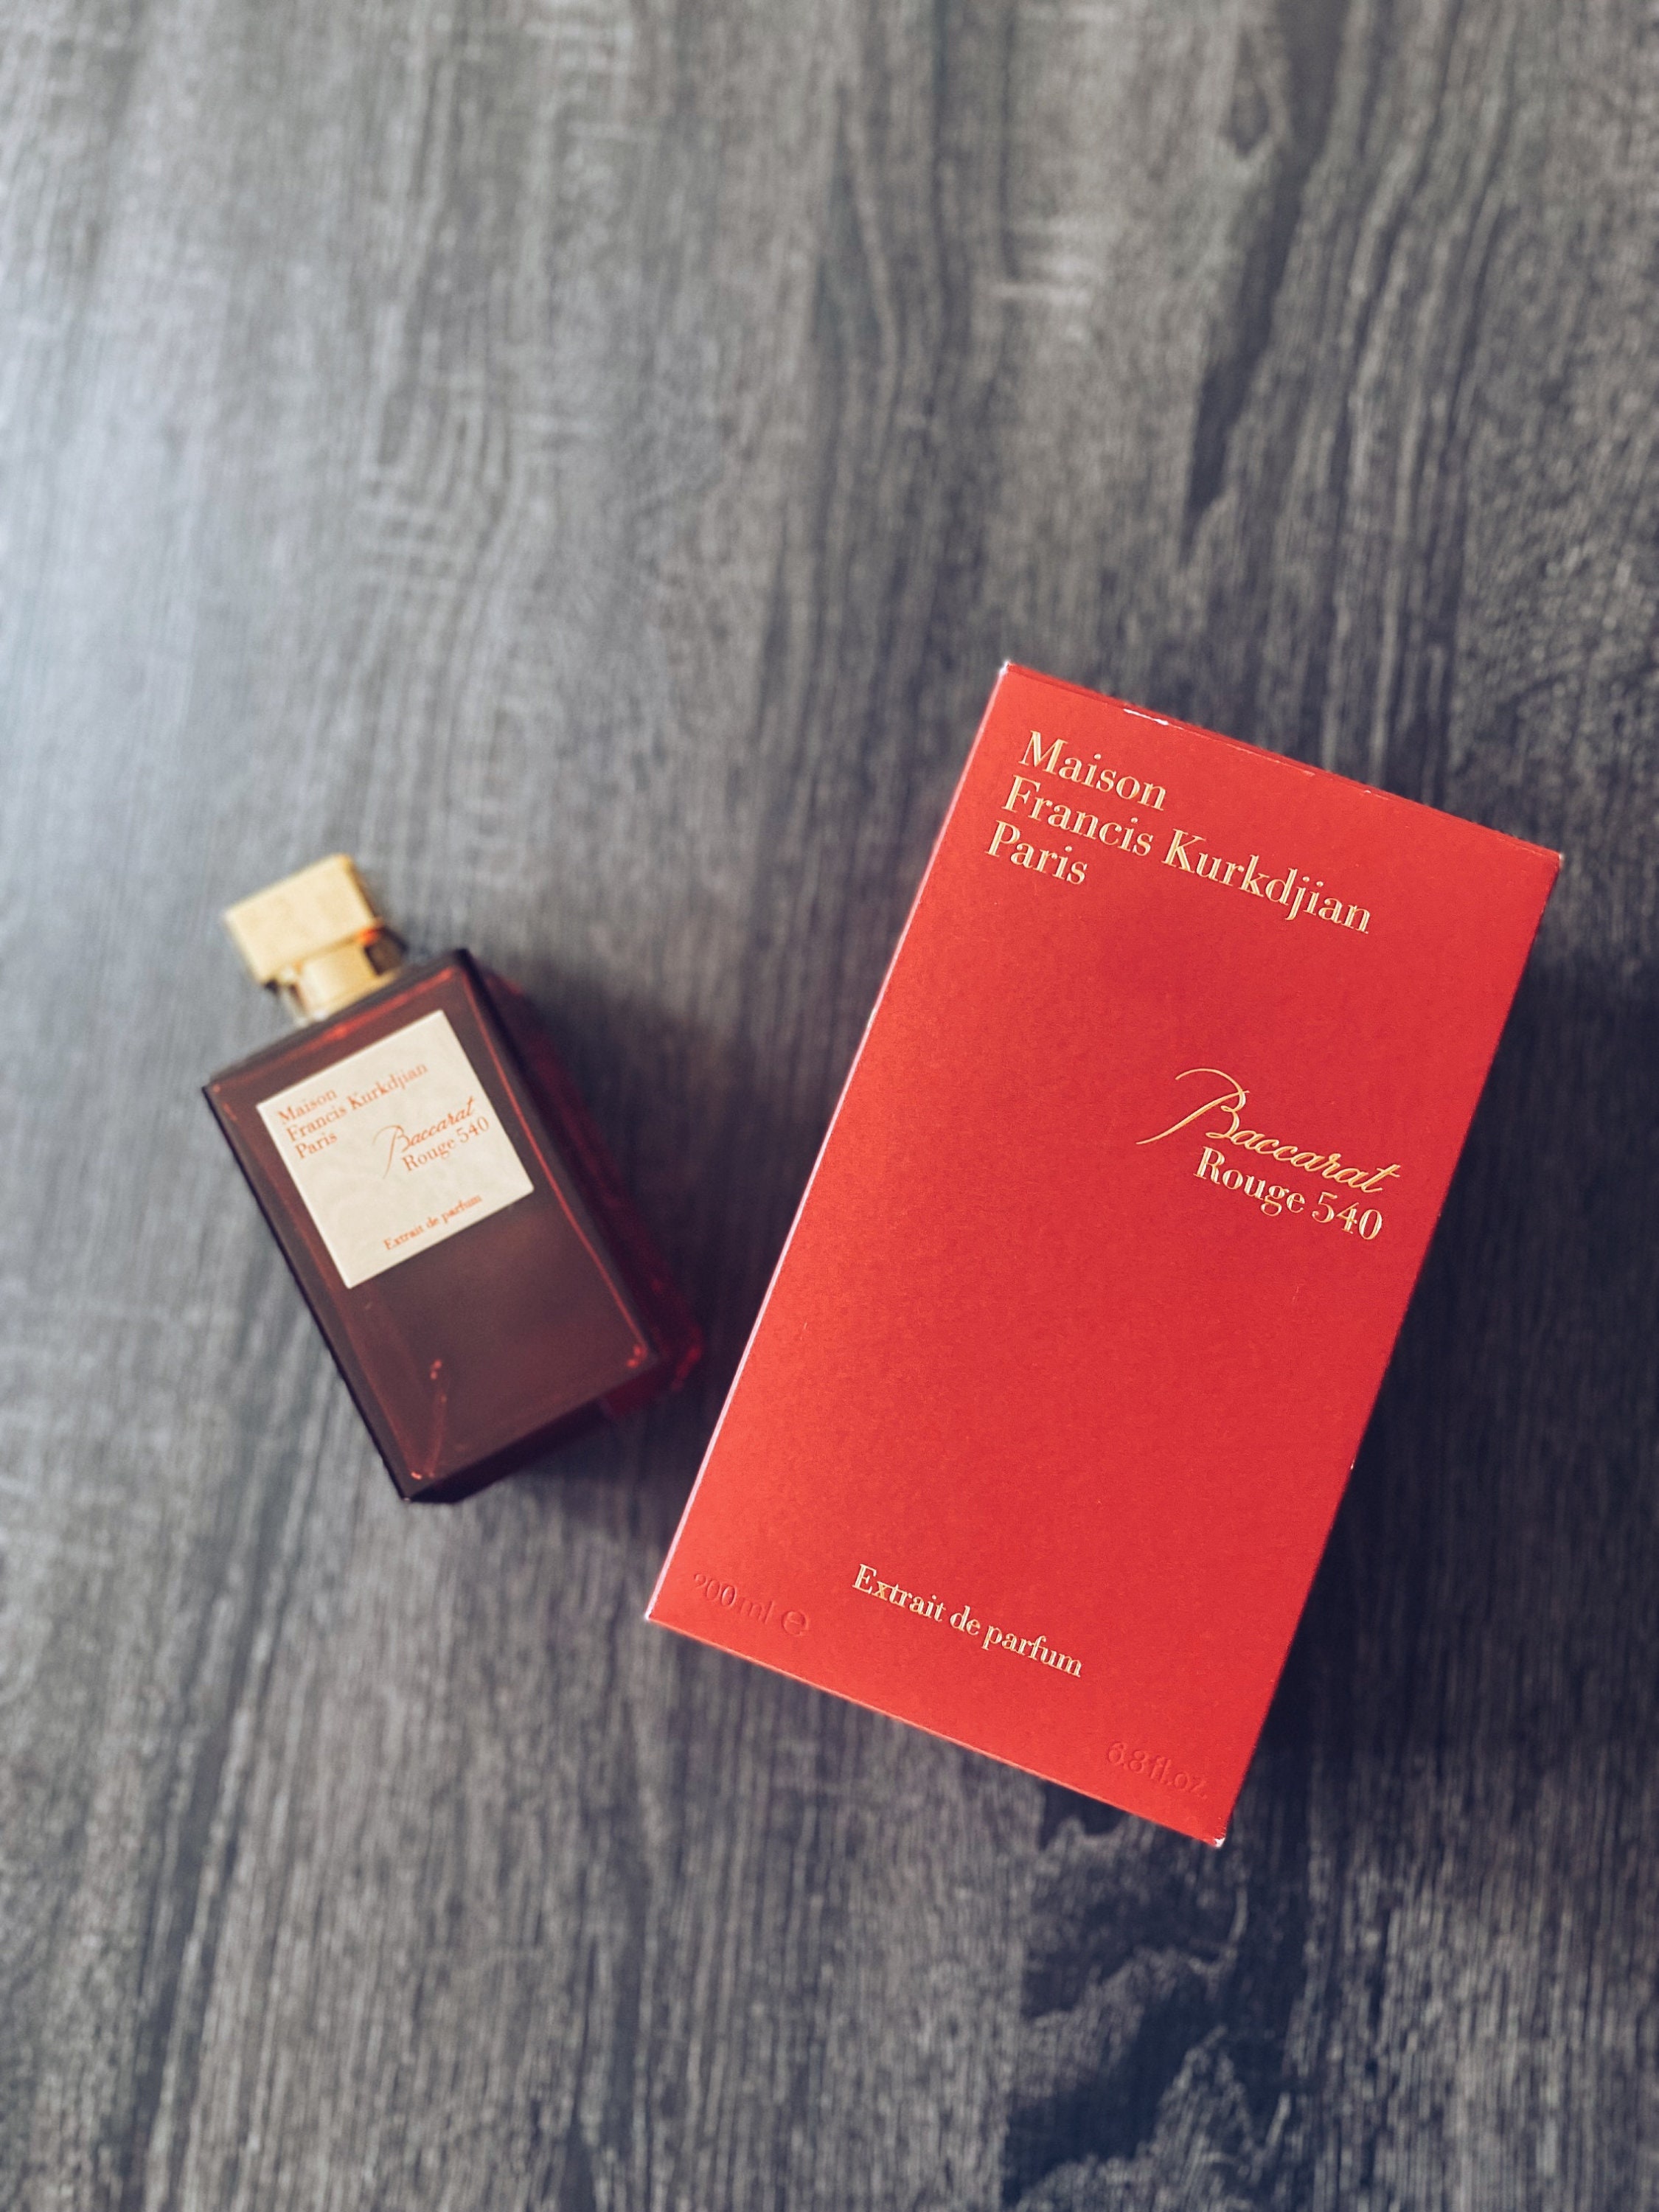 Maison Francis Kurkdjian Baccarat Rouge 540 Eau de Parfum, 6.8 fl